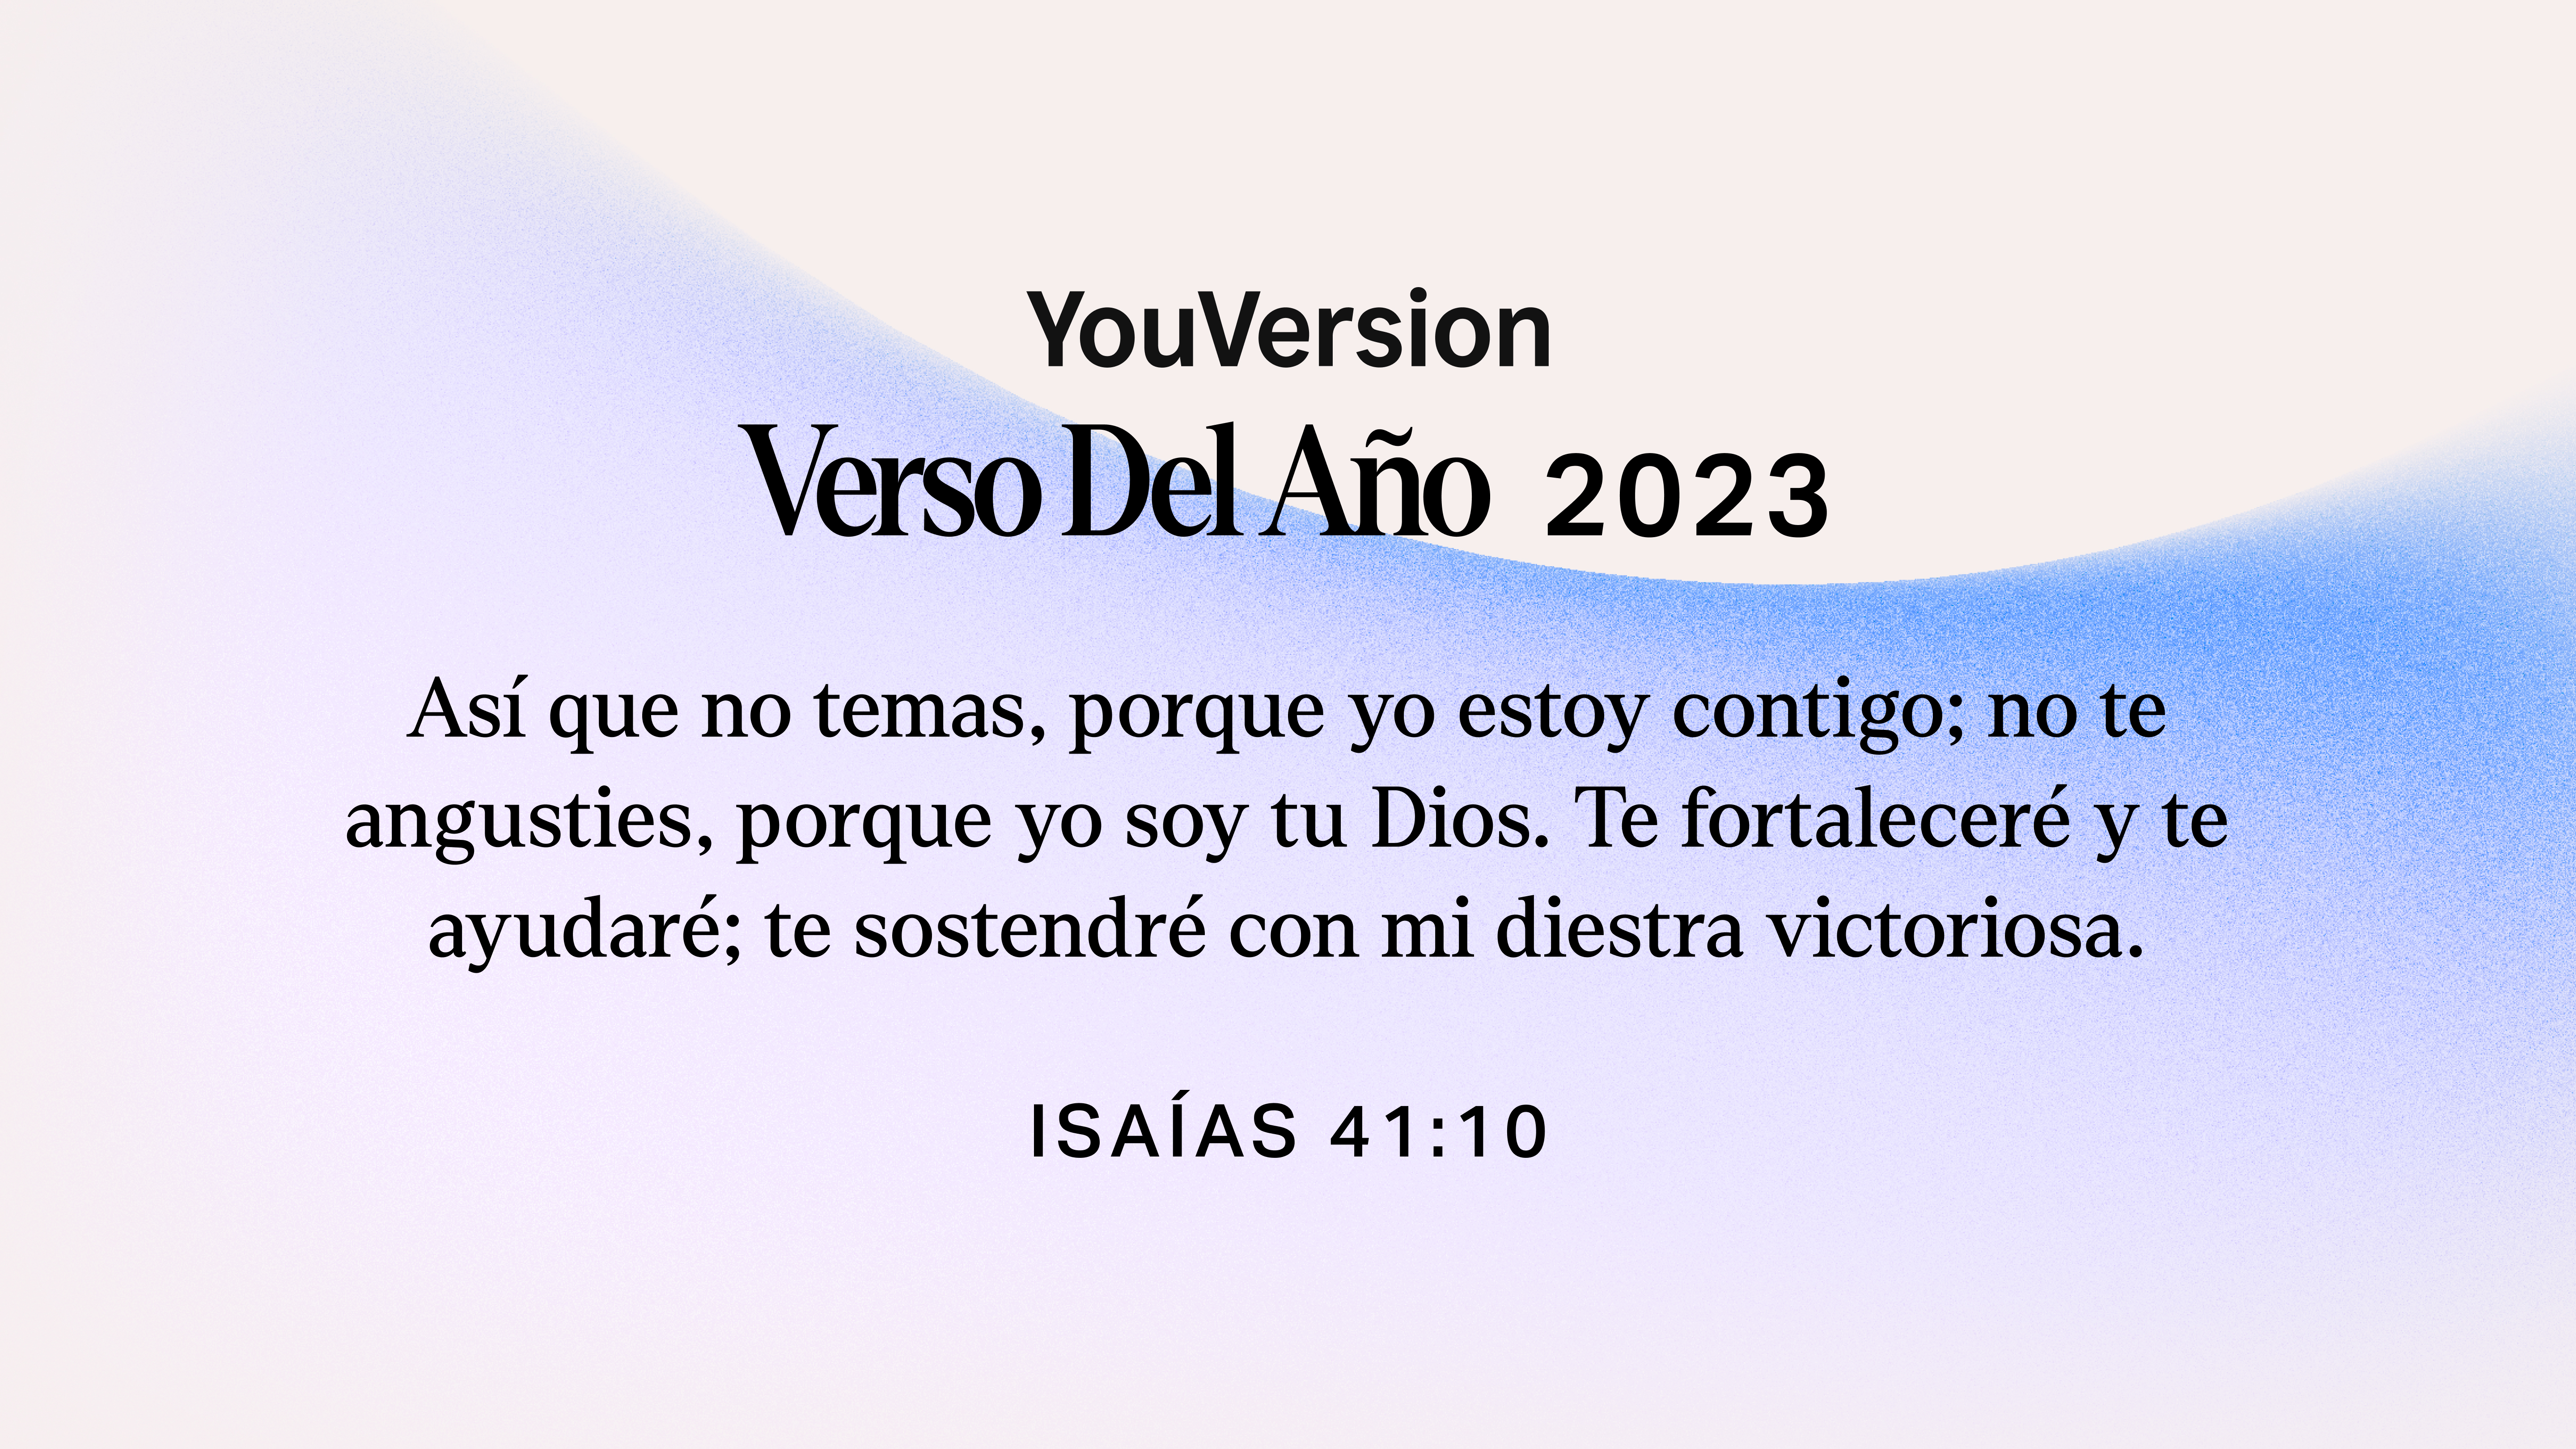 Verse of the Year en espanol